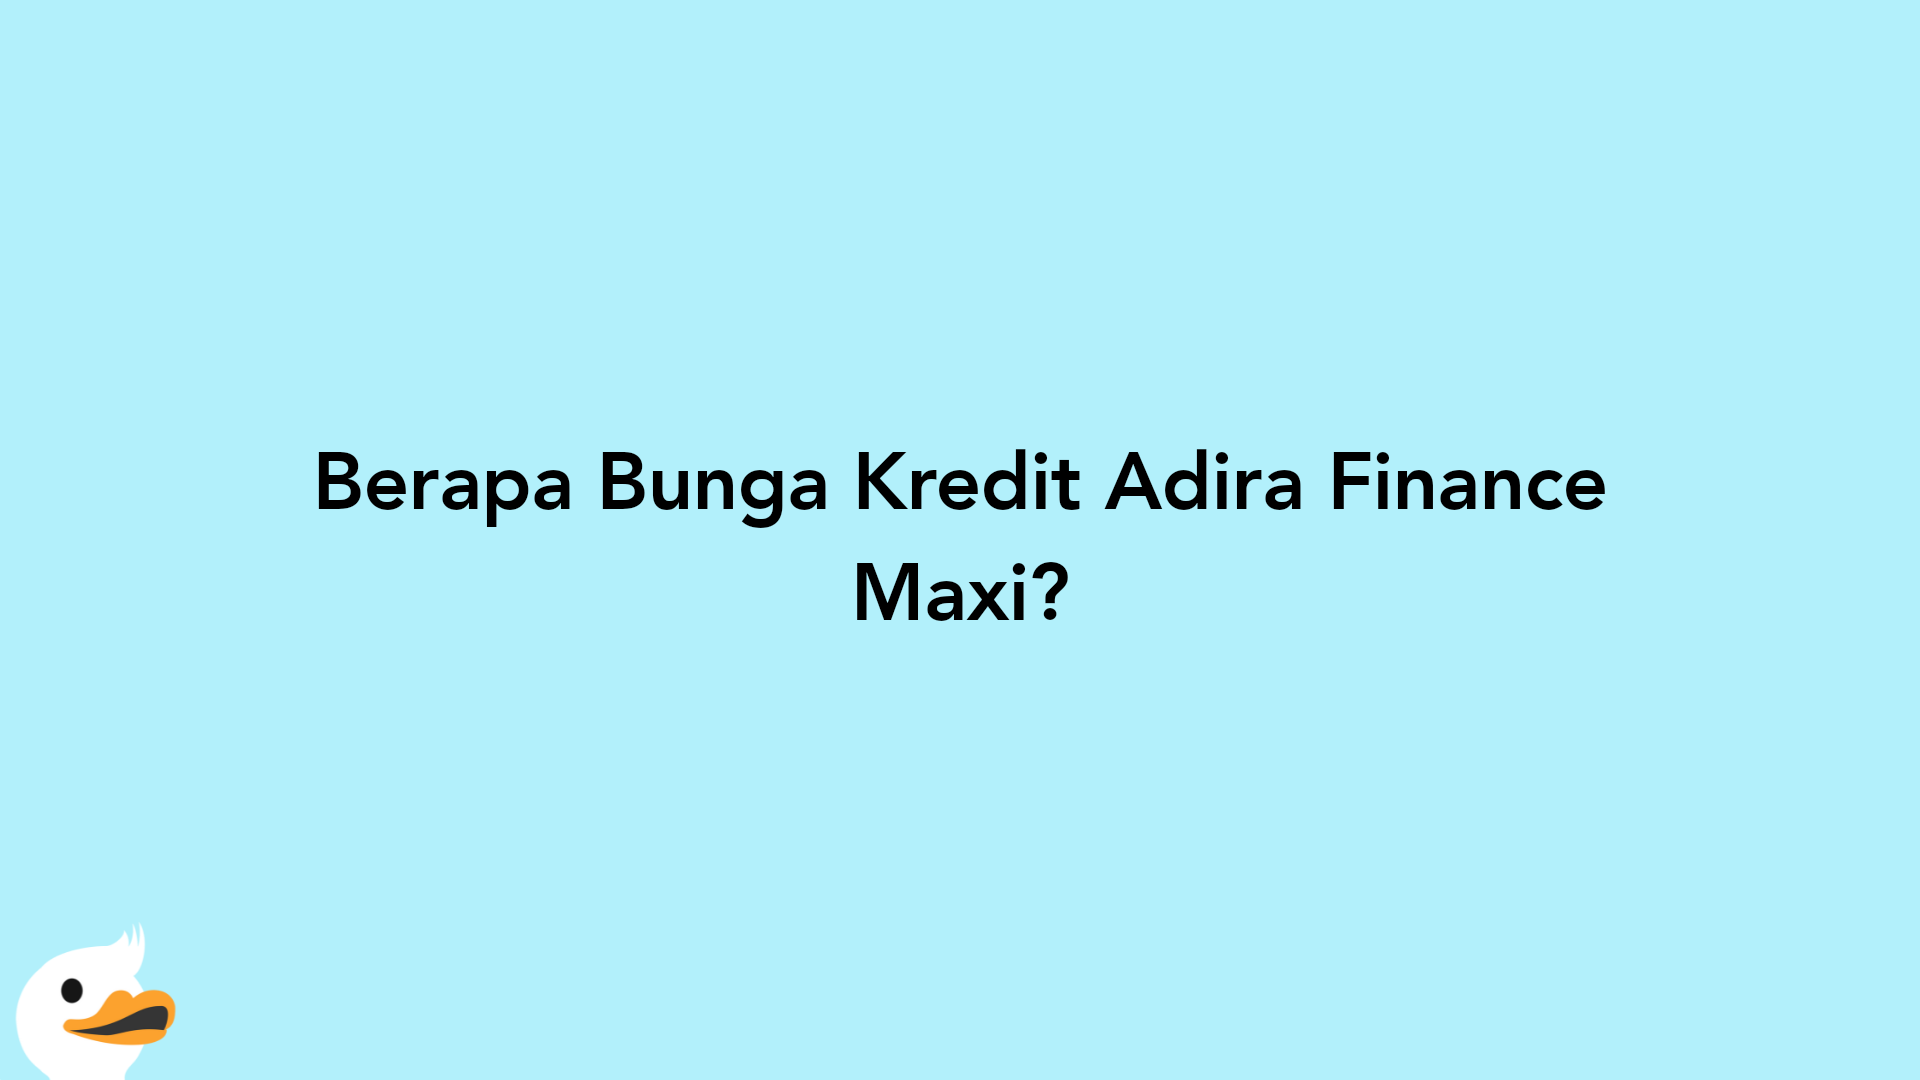 Berapa Bunga Kredit Adira Finance Maxi?